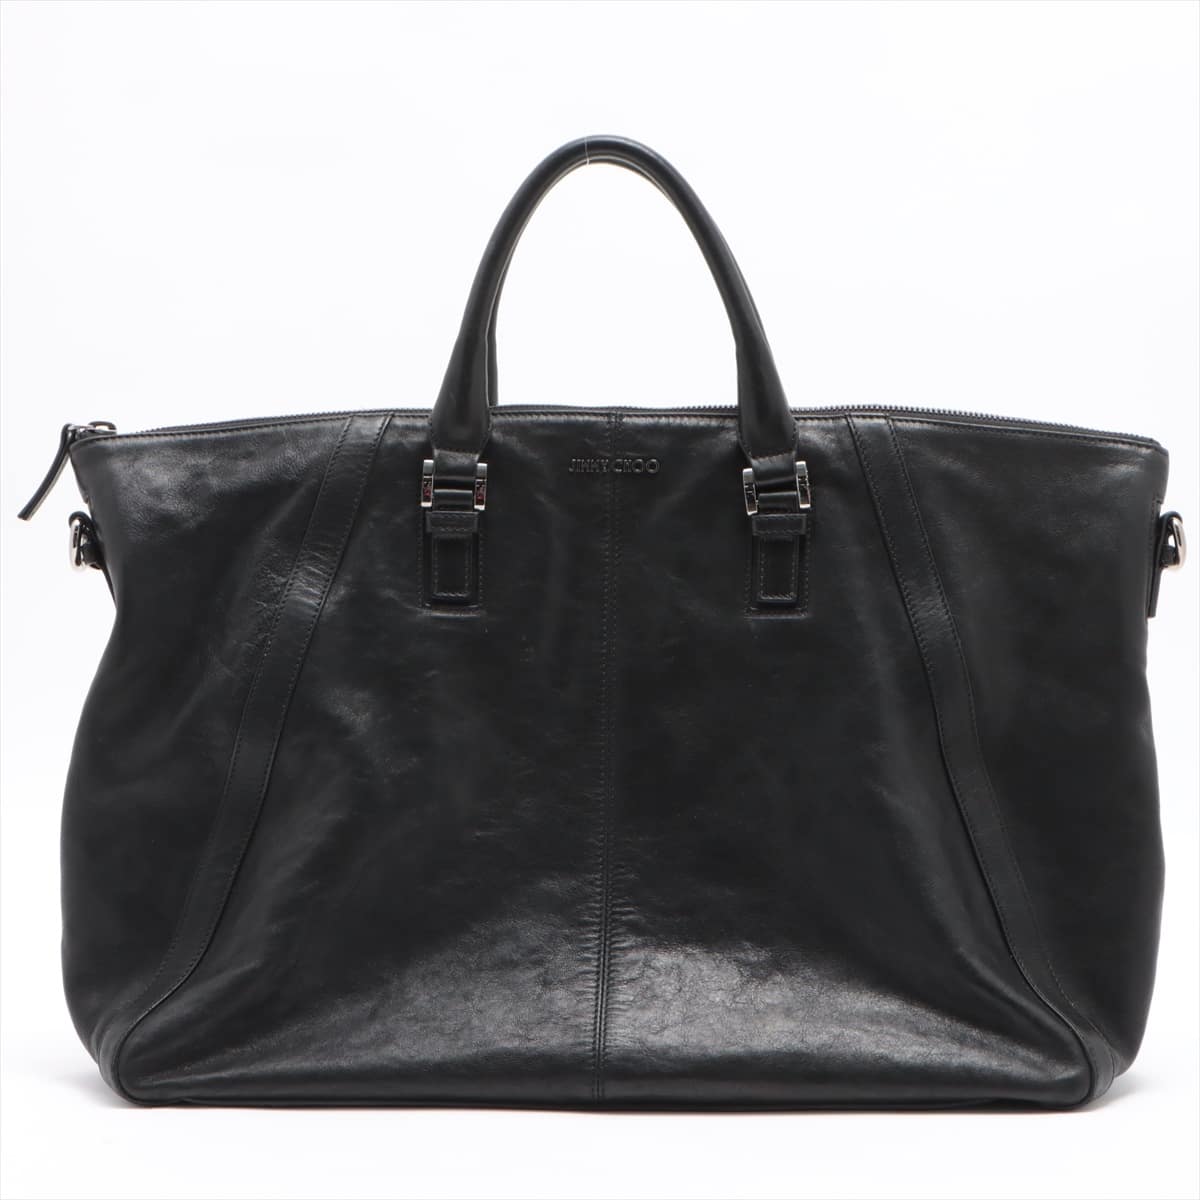 Jimmy Choo Leather 2way handbag Black